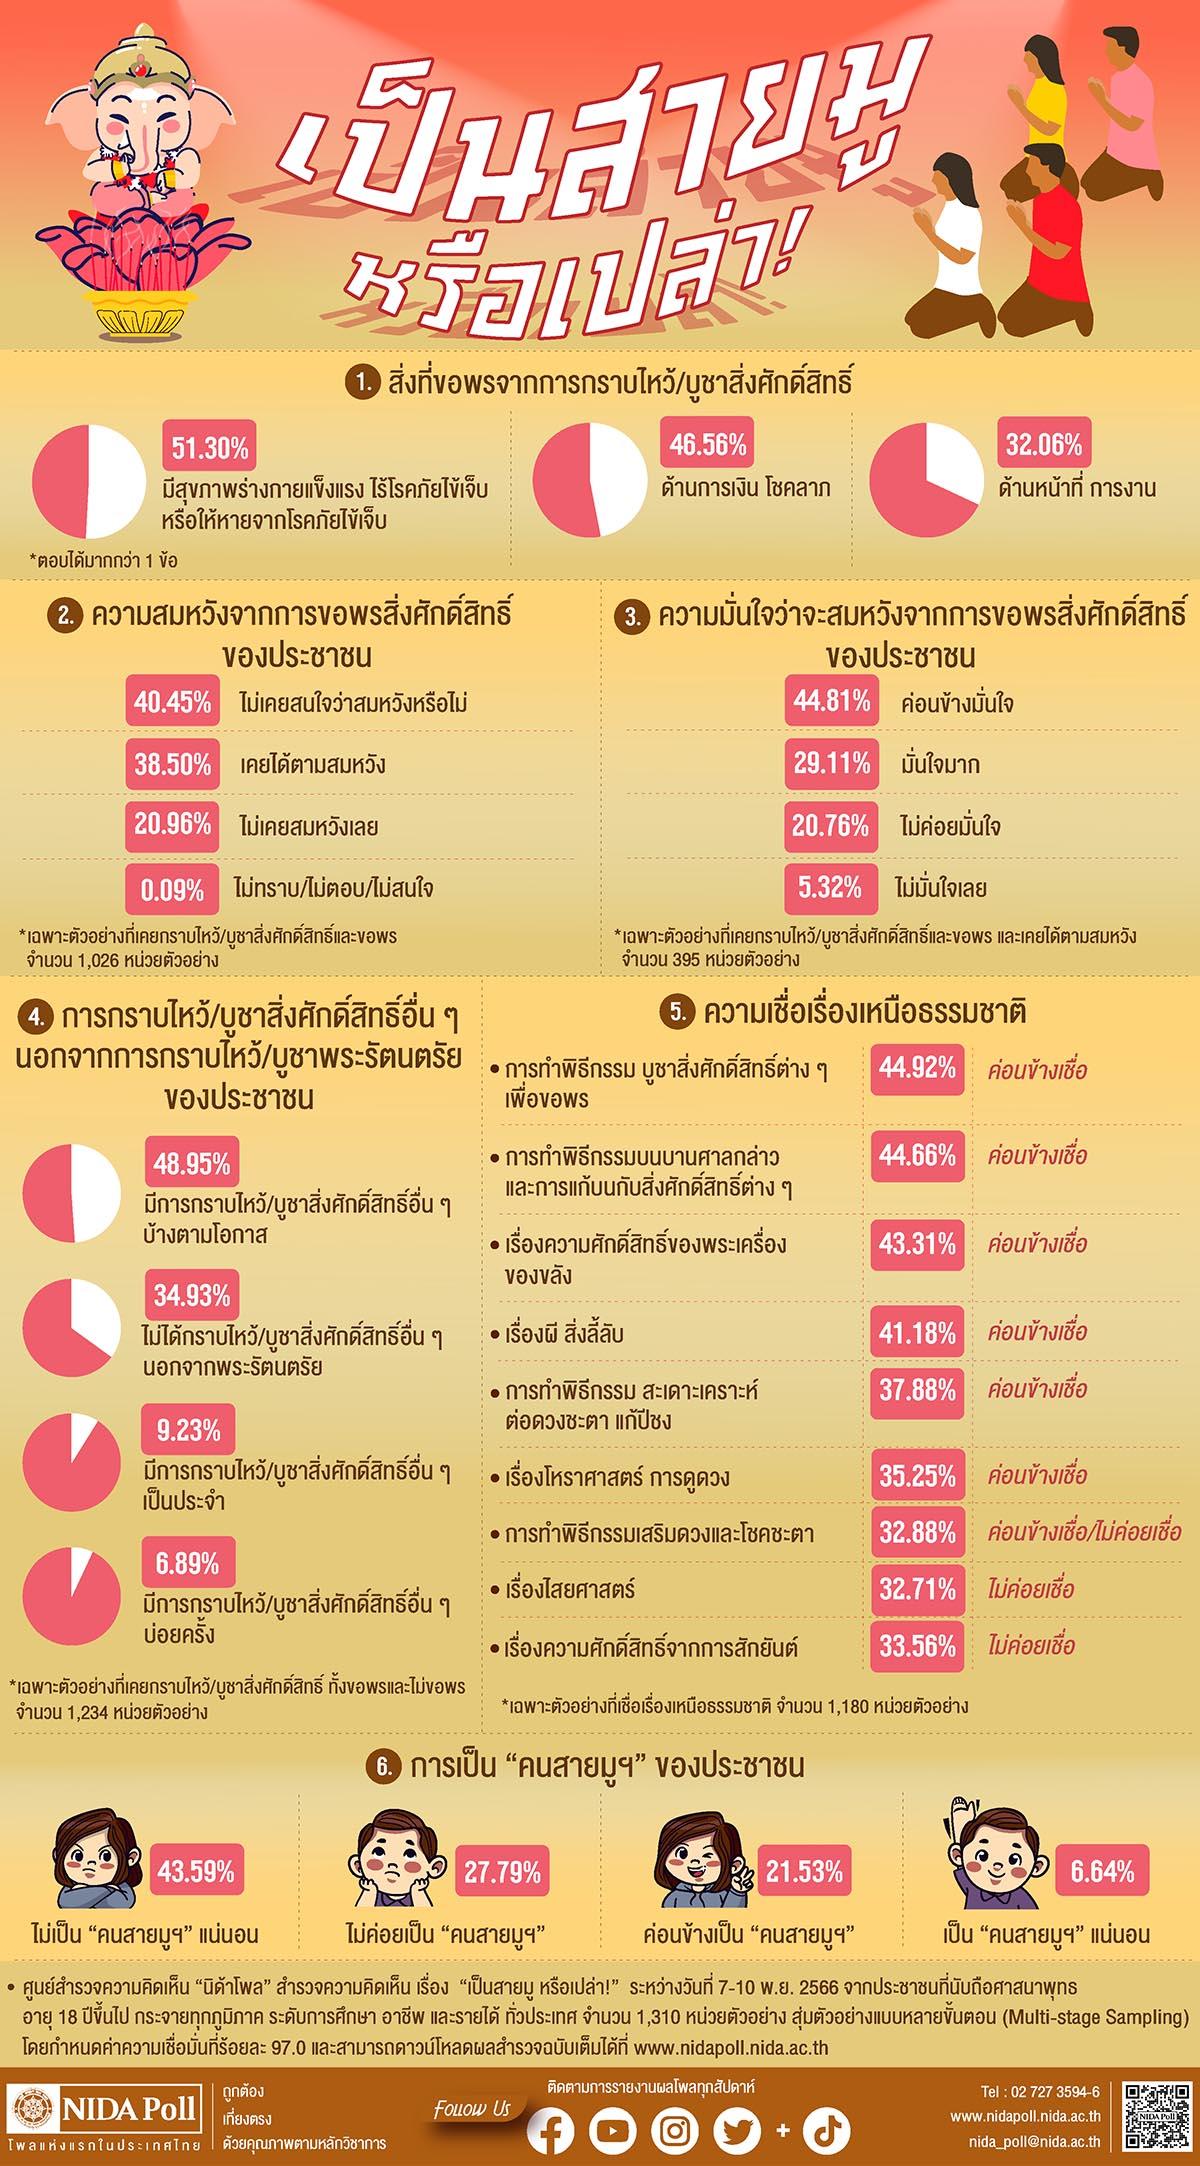 Nida-Poll-Test-on-Thai-Faith-Mutelu-SPACEBAR-Photo01.jpg